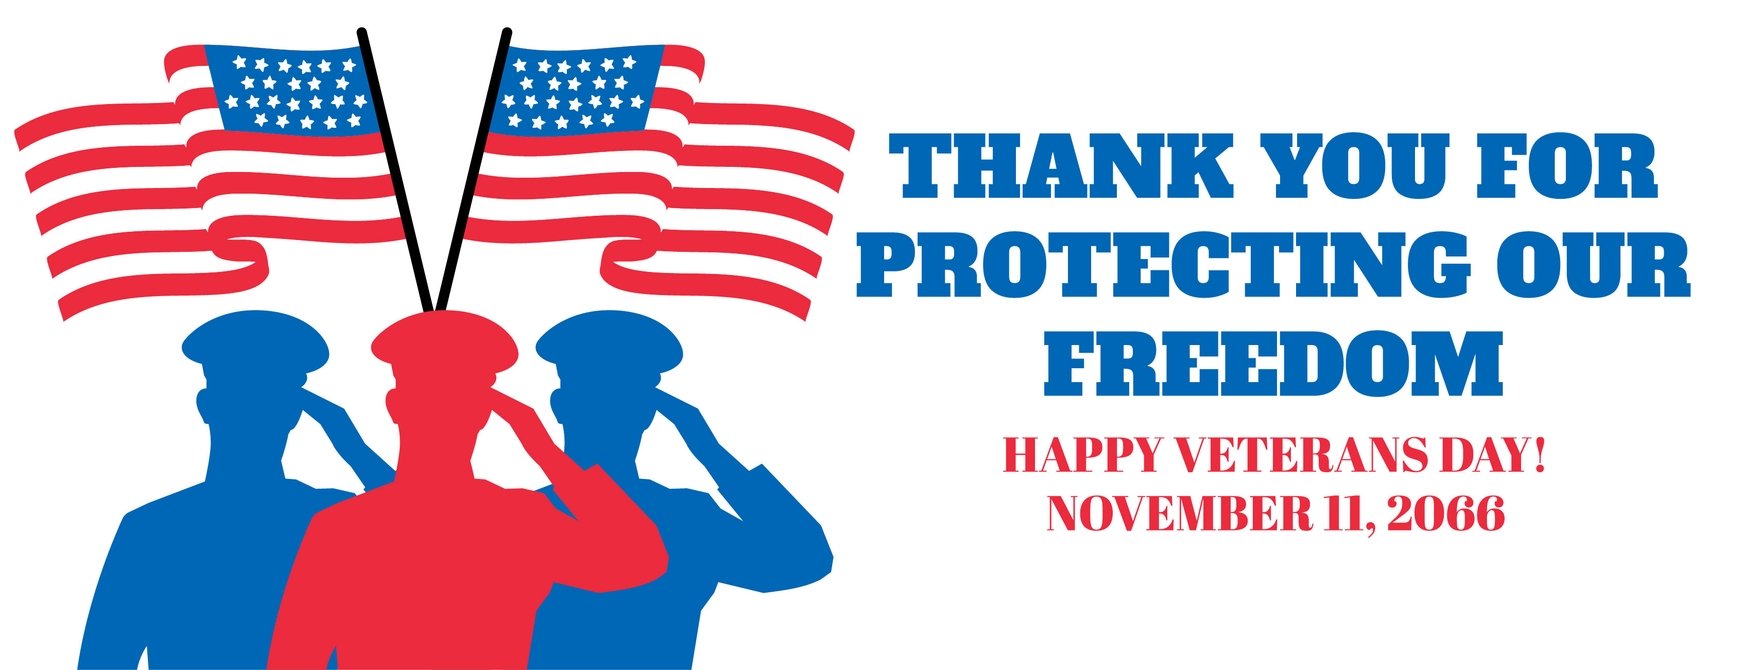 Veterans Day Facebook Cover Banner in Illustrator, PSD, EPS, SVG, JPG, PNG